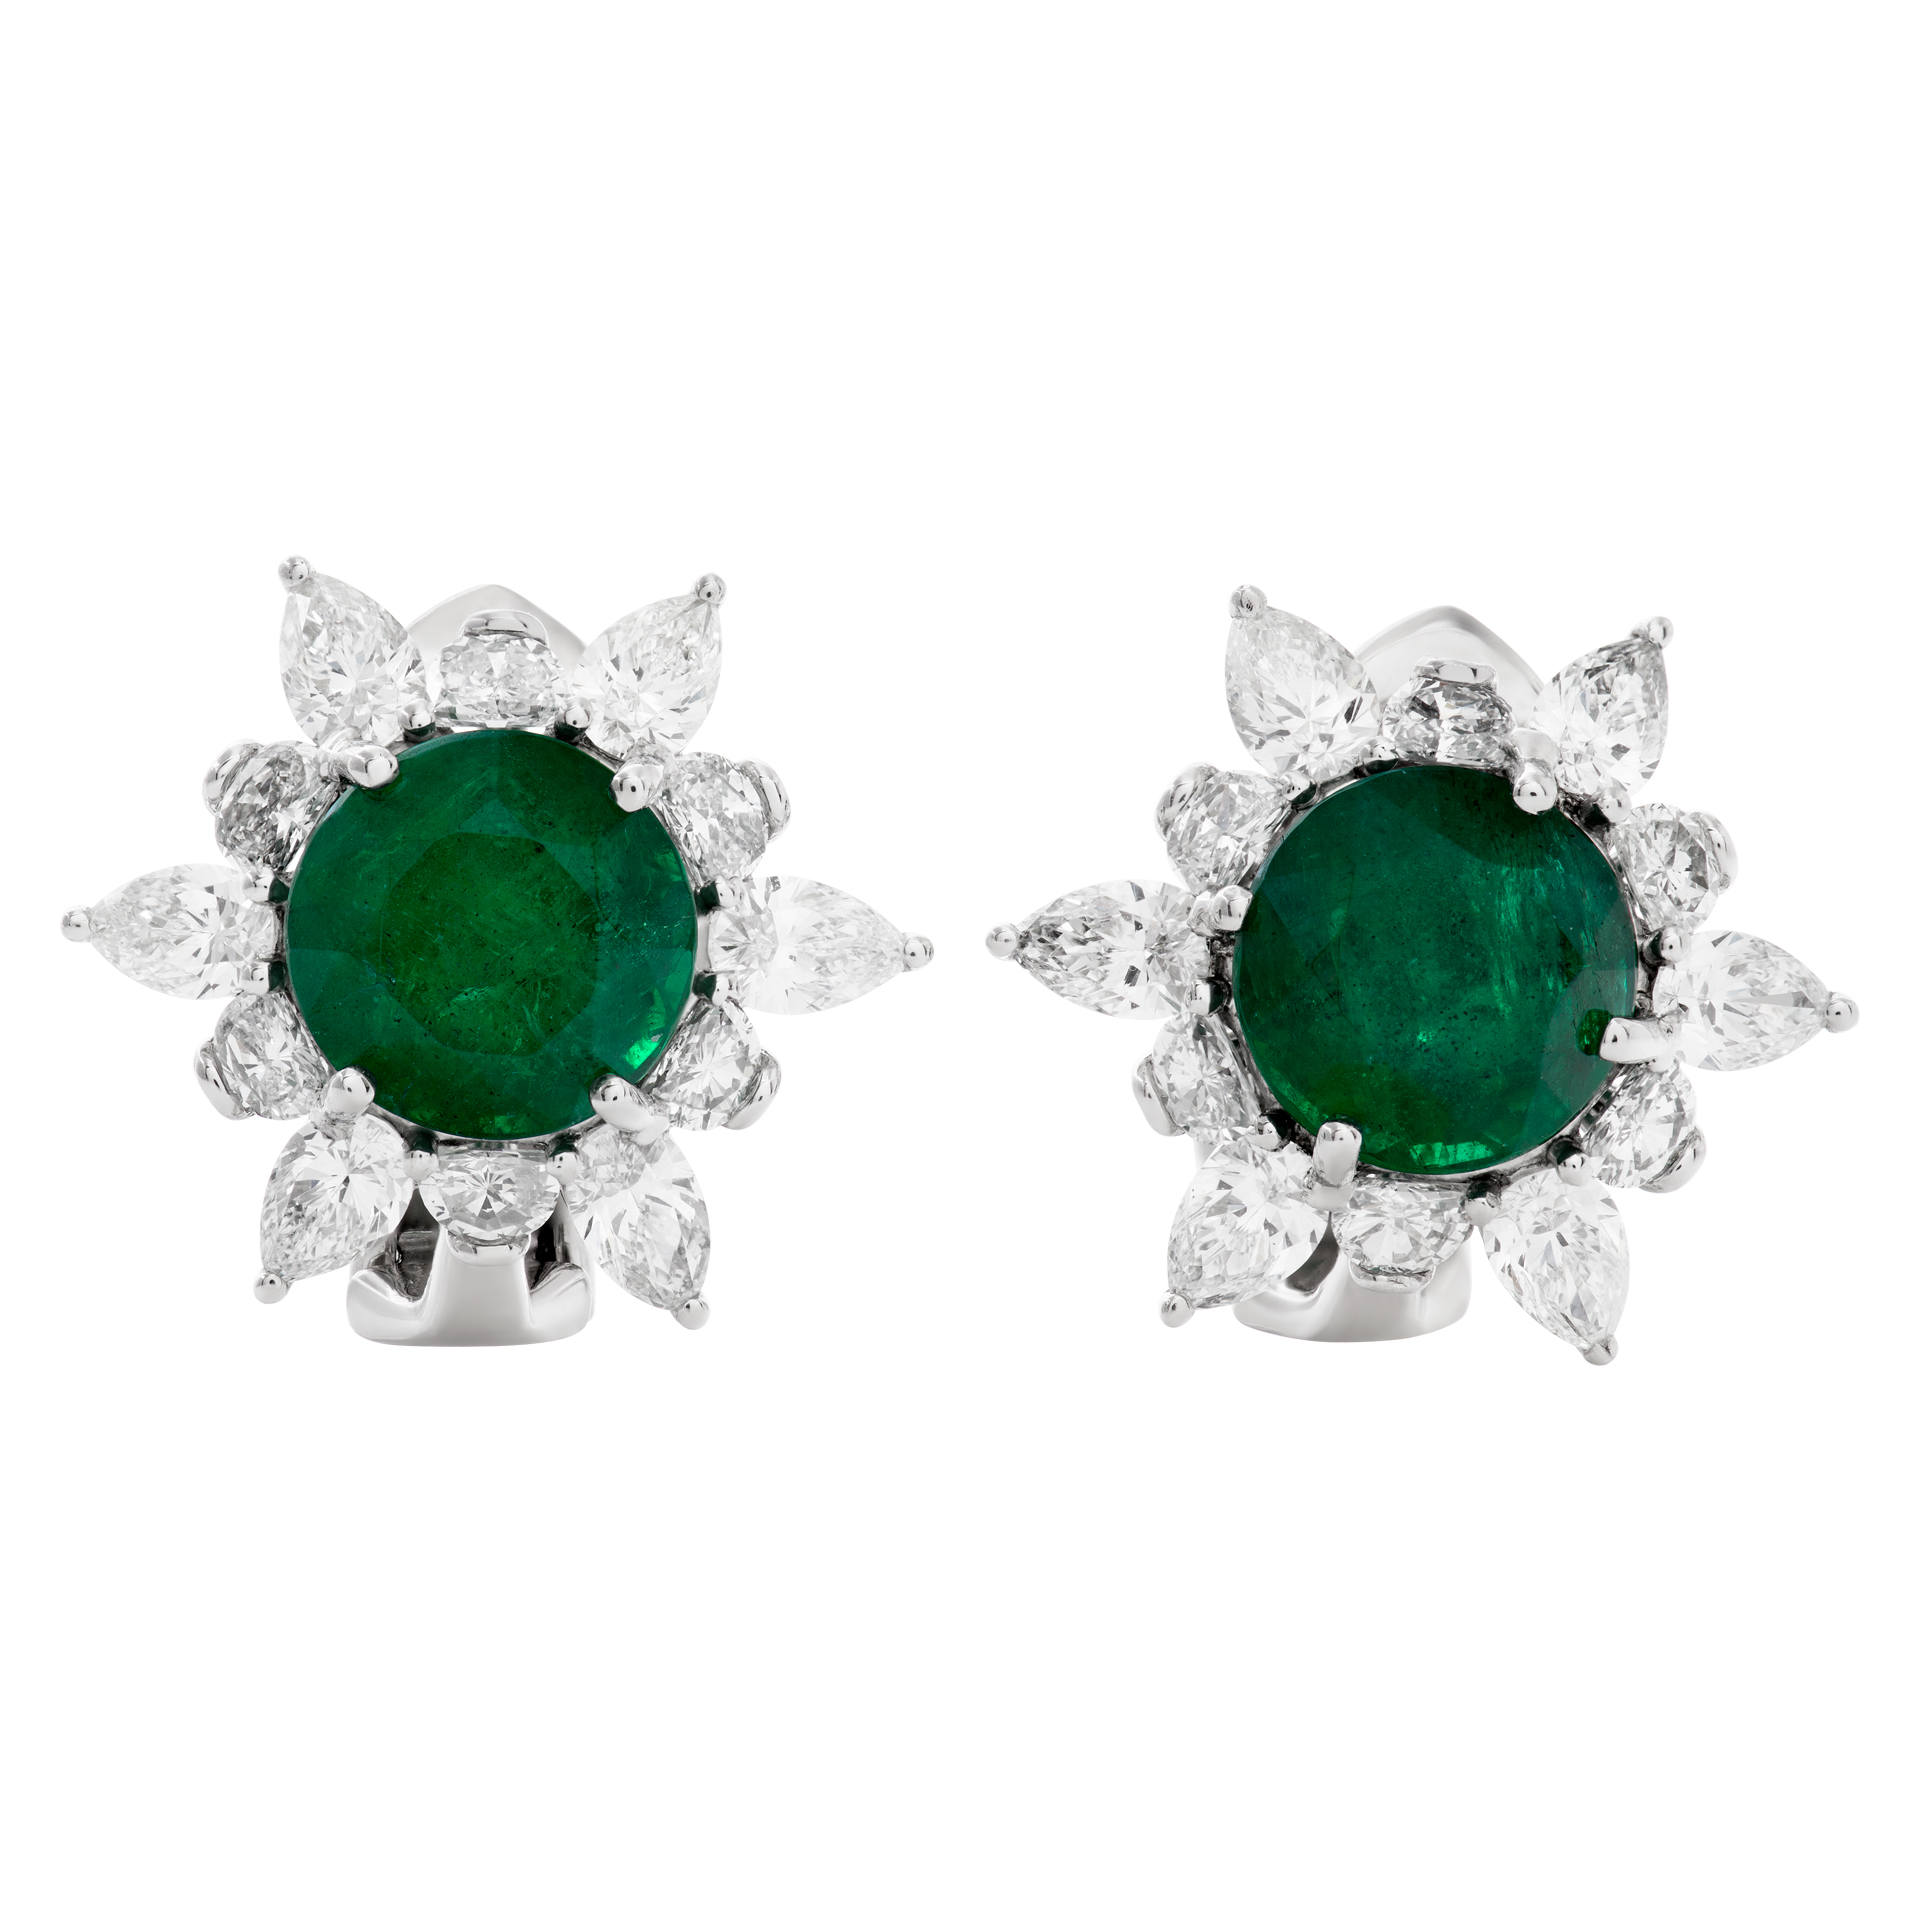 Elegant round African emerald and diamond earrings in platinum